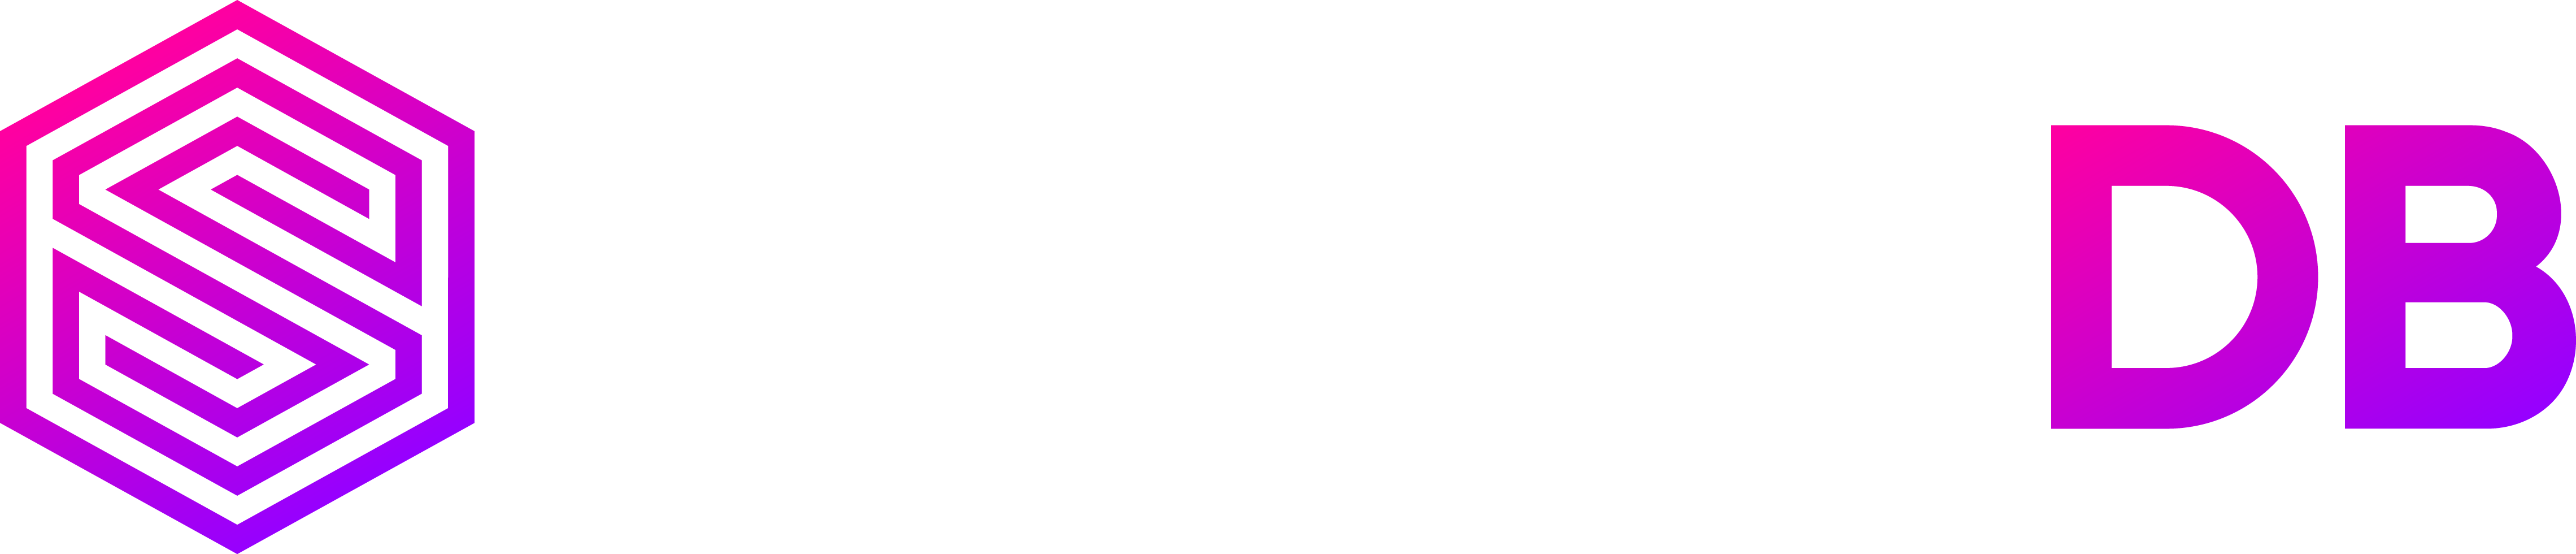 SurrealDB Logo